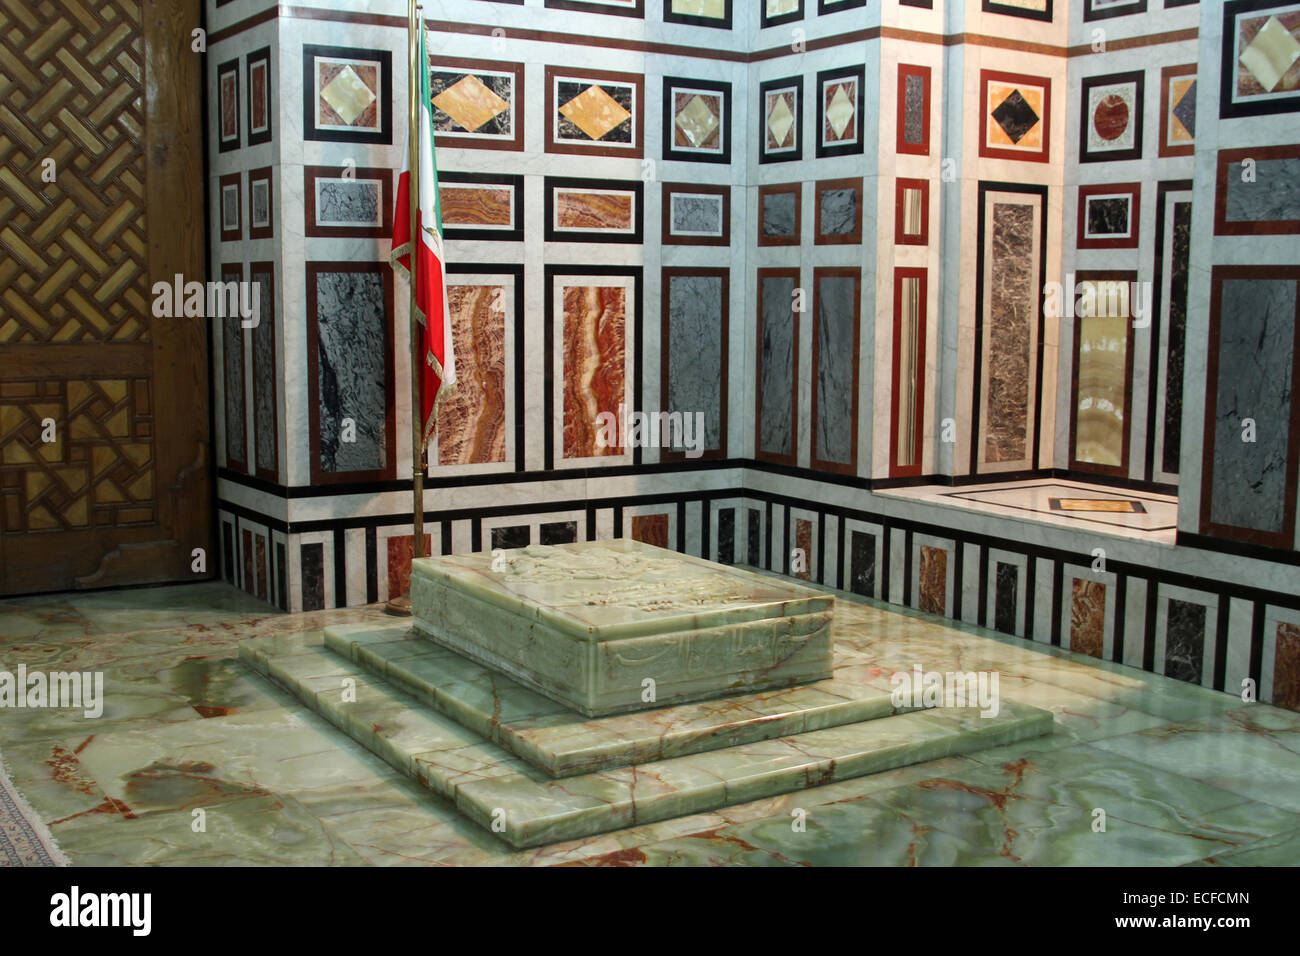 The tomb of Mohammad Reza Shah Pahlavi, the last shah of Iran, in Al-Rifa'i Mosque, Cairo, Egypt Stock Photo